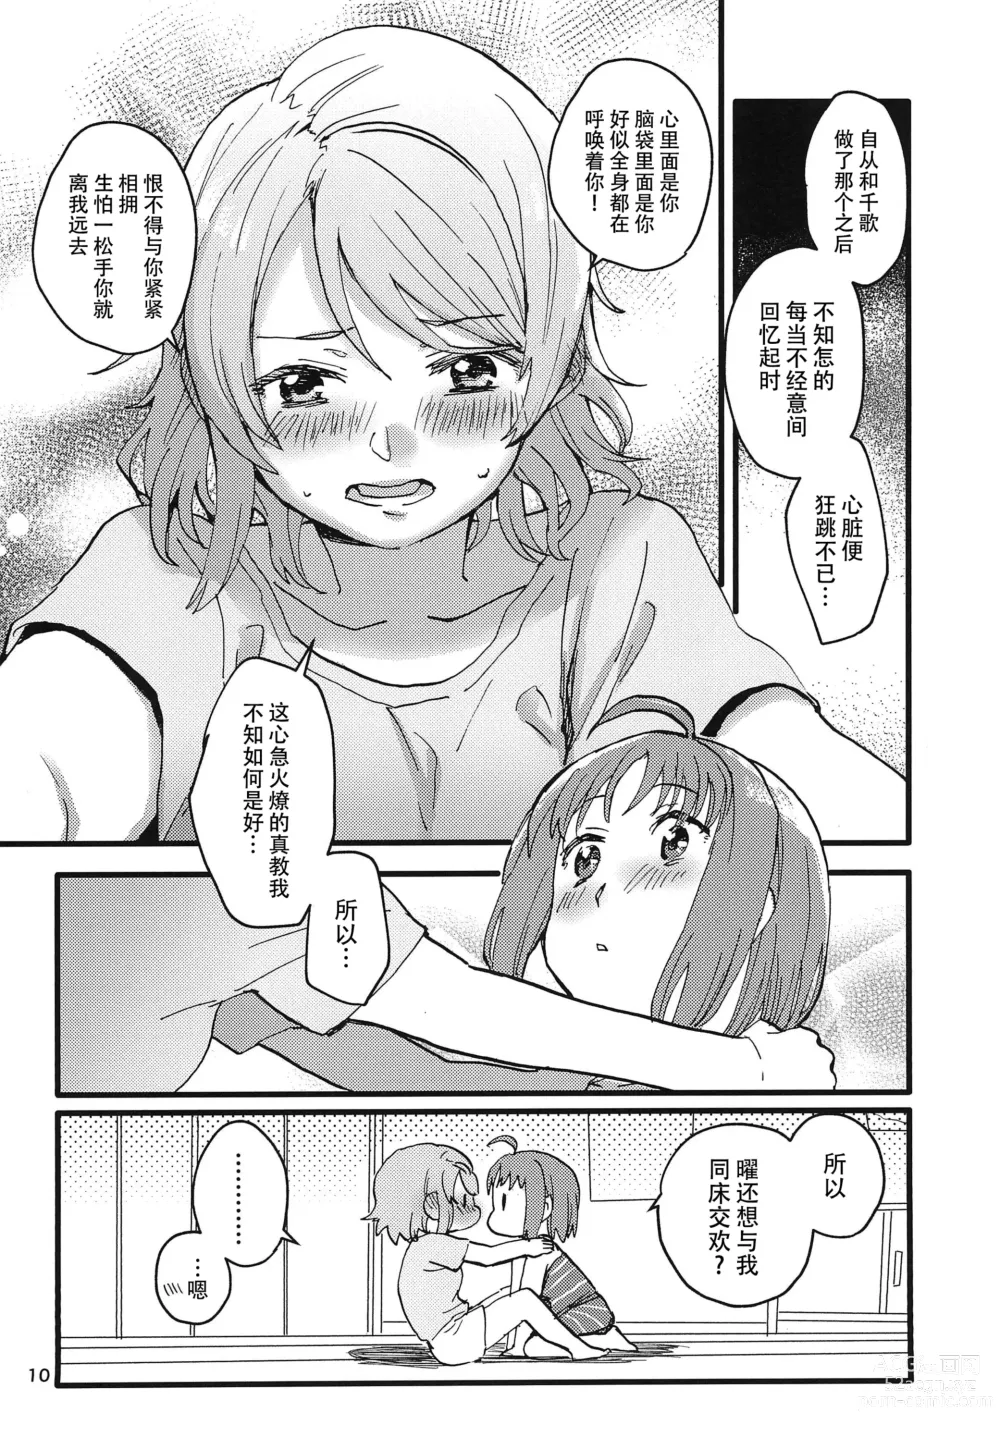 Page 13 of doujinshi 微热烈火